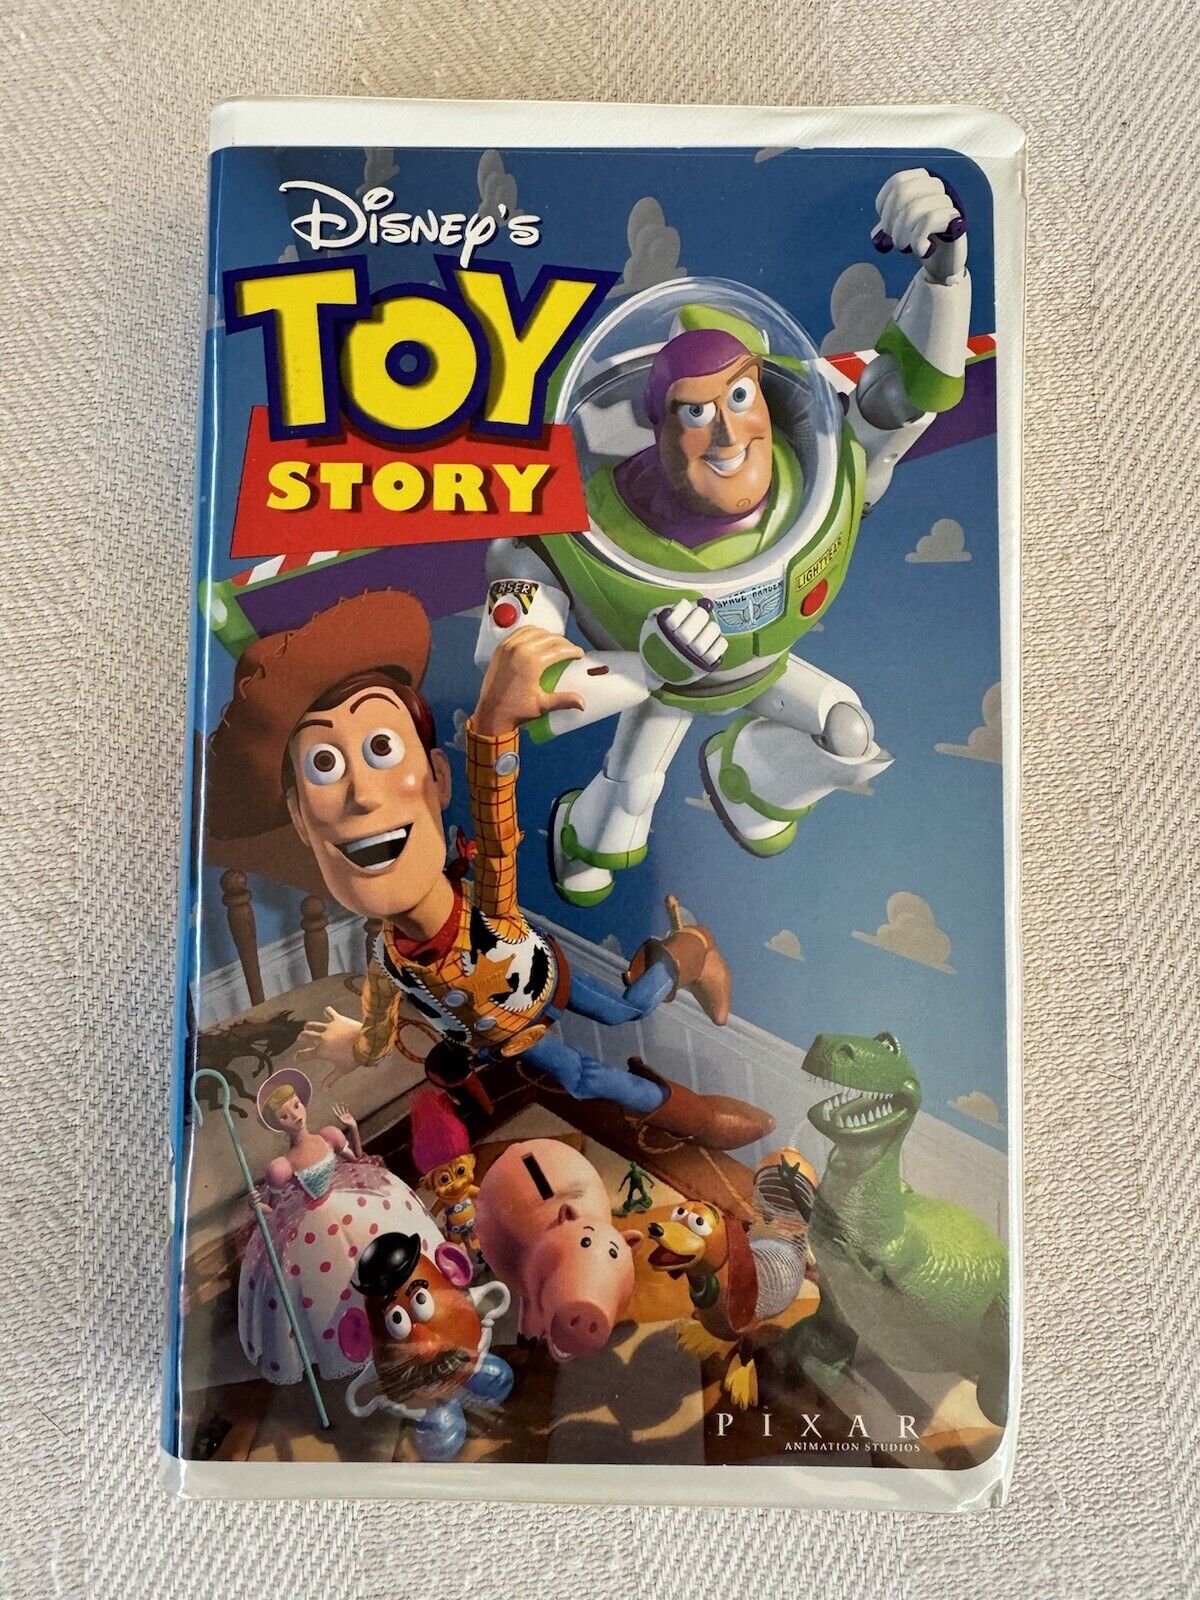 Toy Story (VHS, 1995) # 6703 Walt Disney Rare Collectible...Wonderful Movie